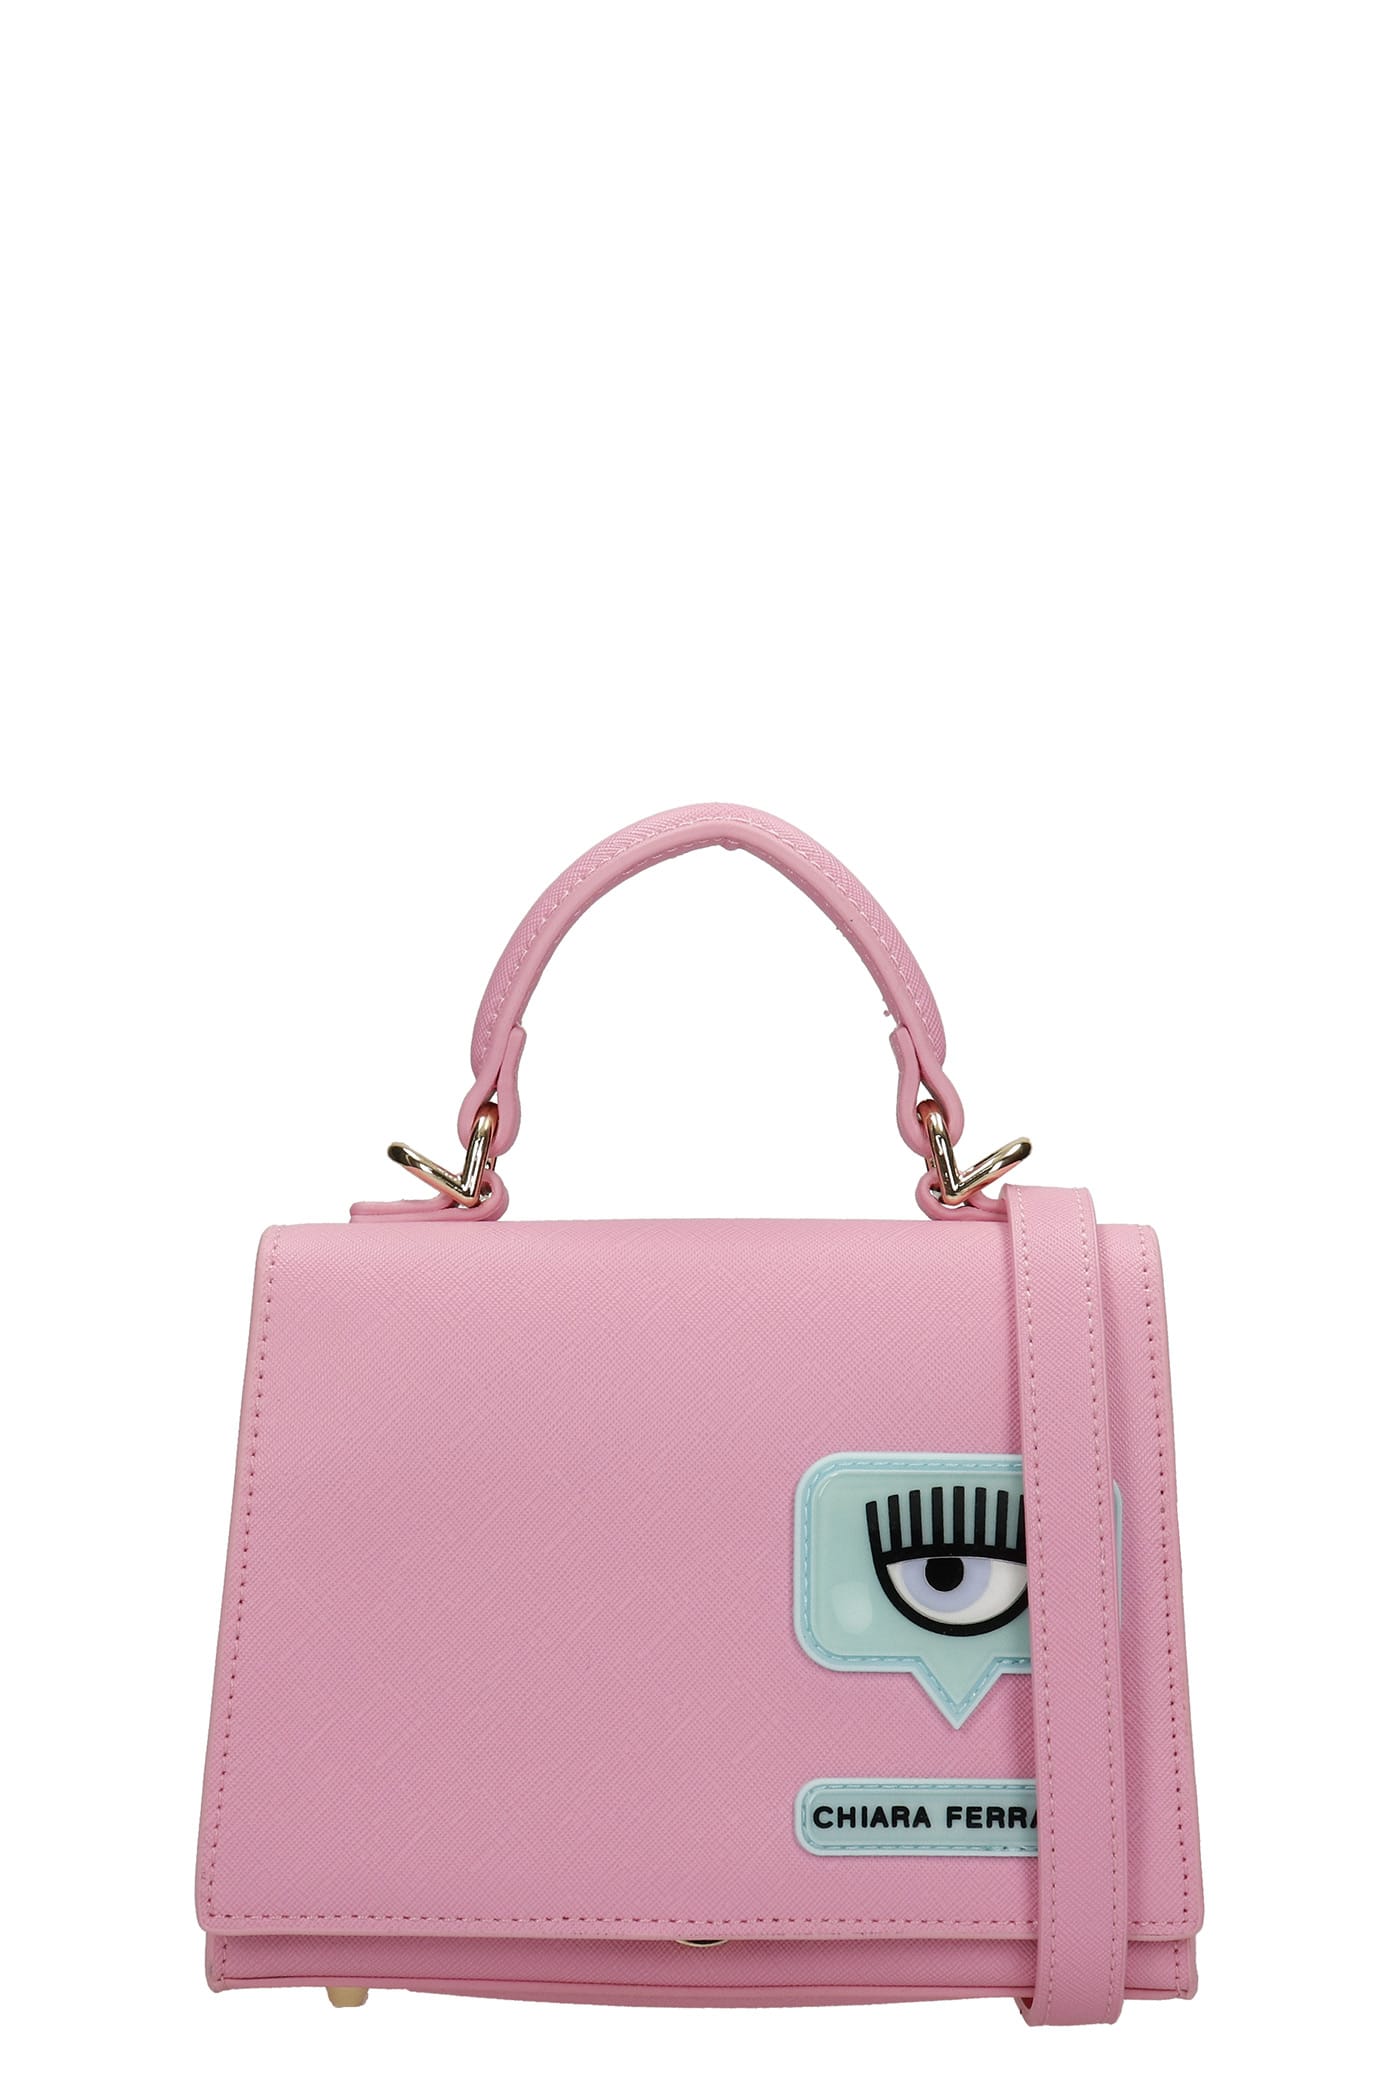 Chiara Ferragni Hand Bag In Rose-pink Faux Leather